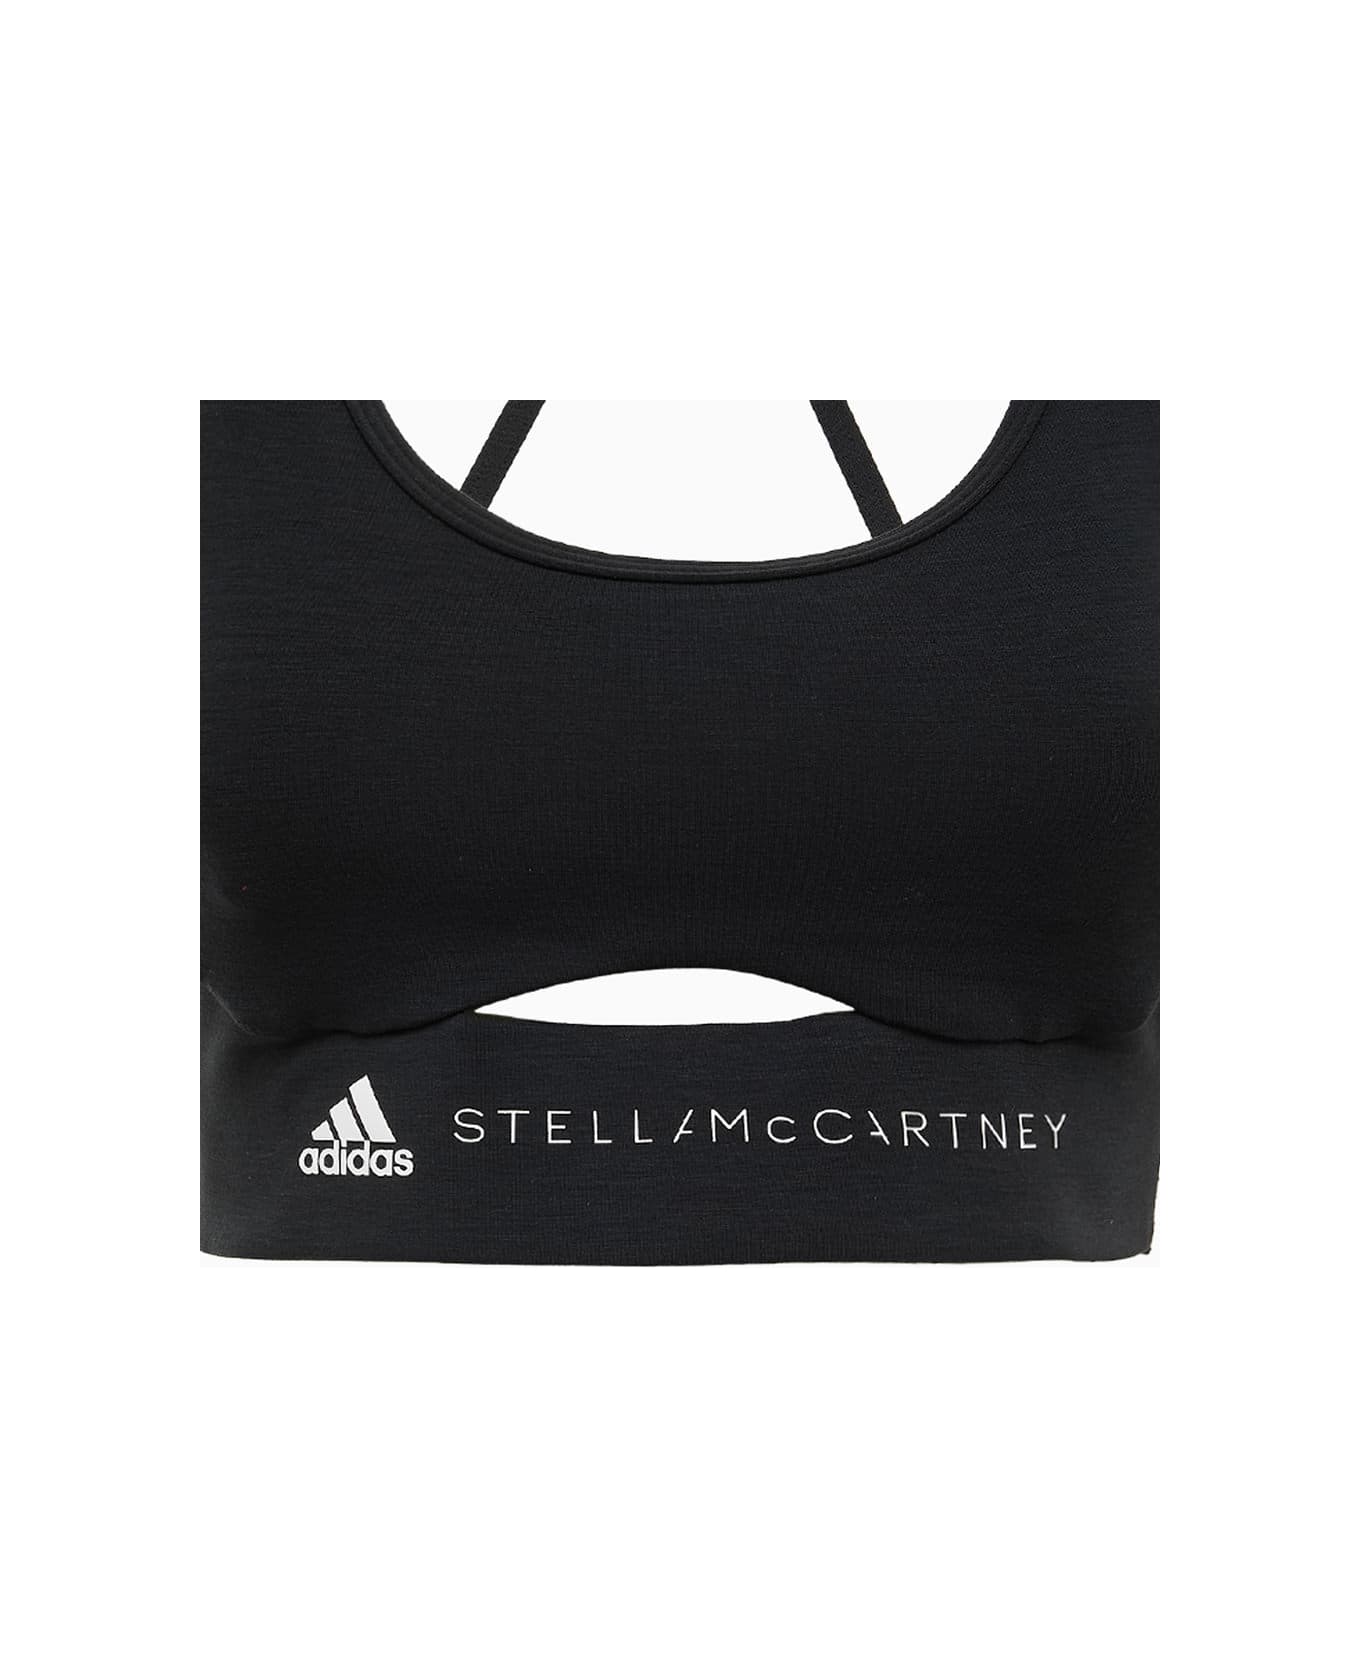 Adidas by Stella McCartney Top Hr2192 - BLACK/WHITE